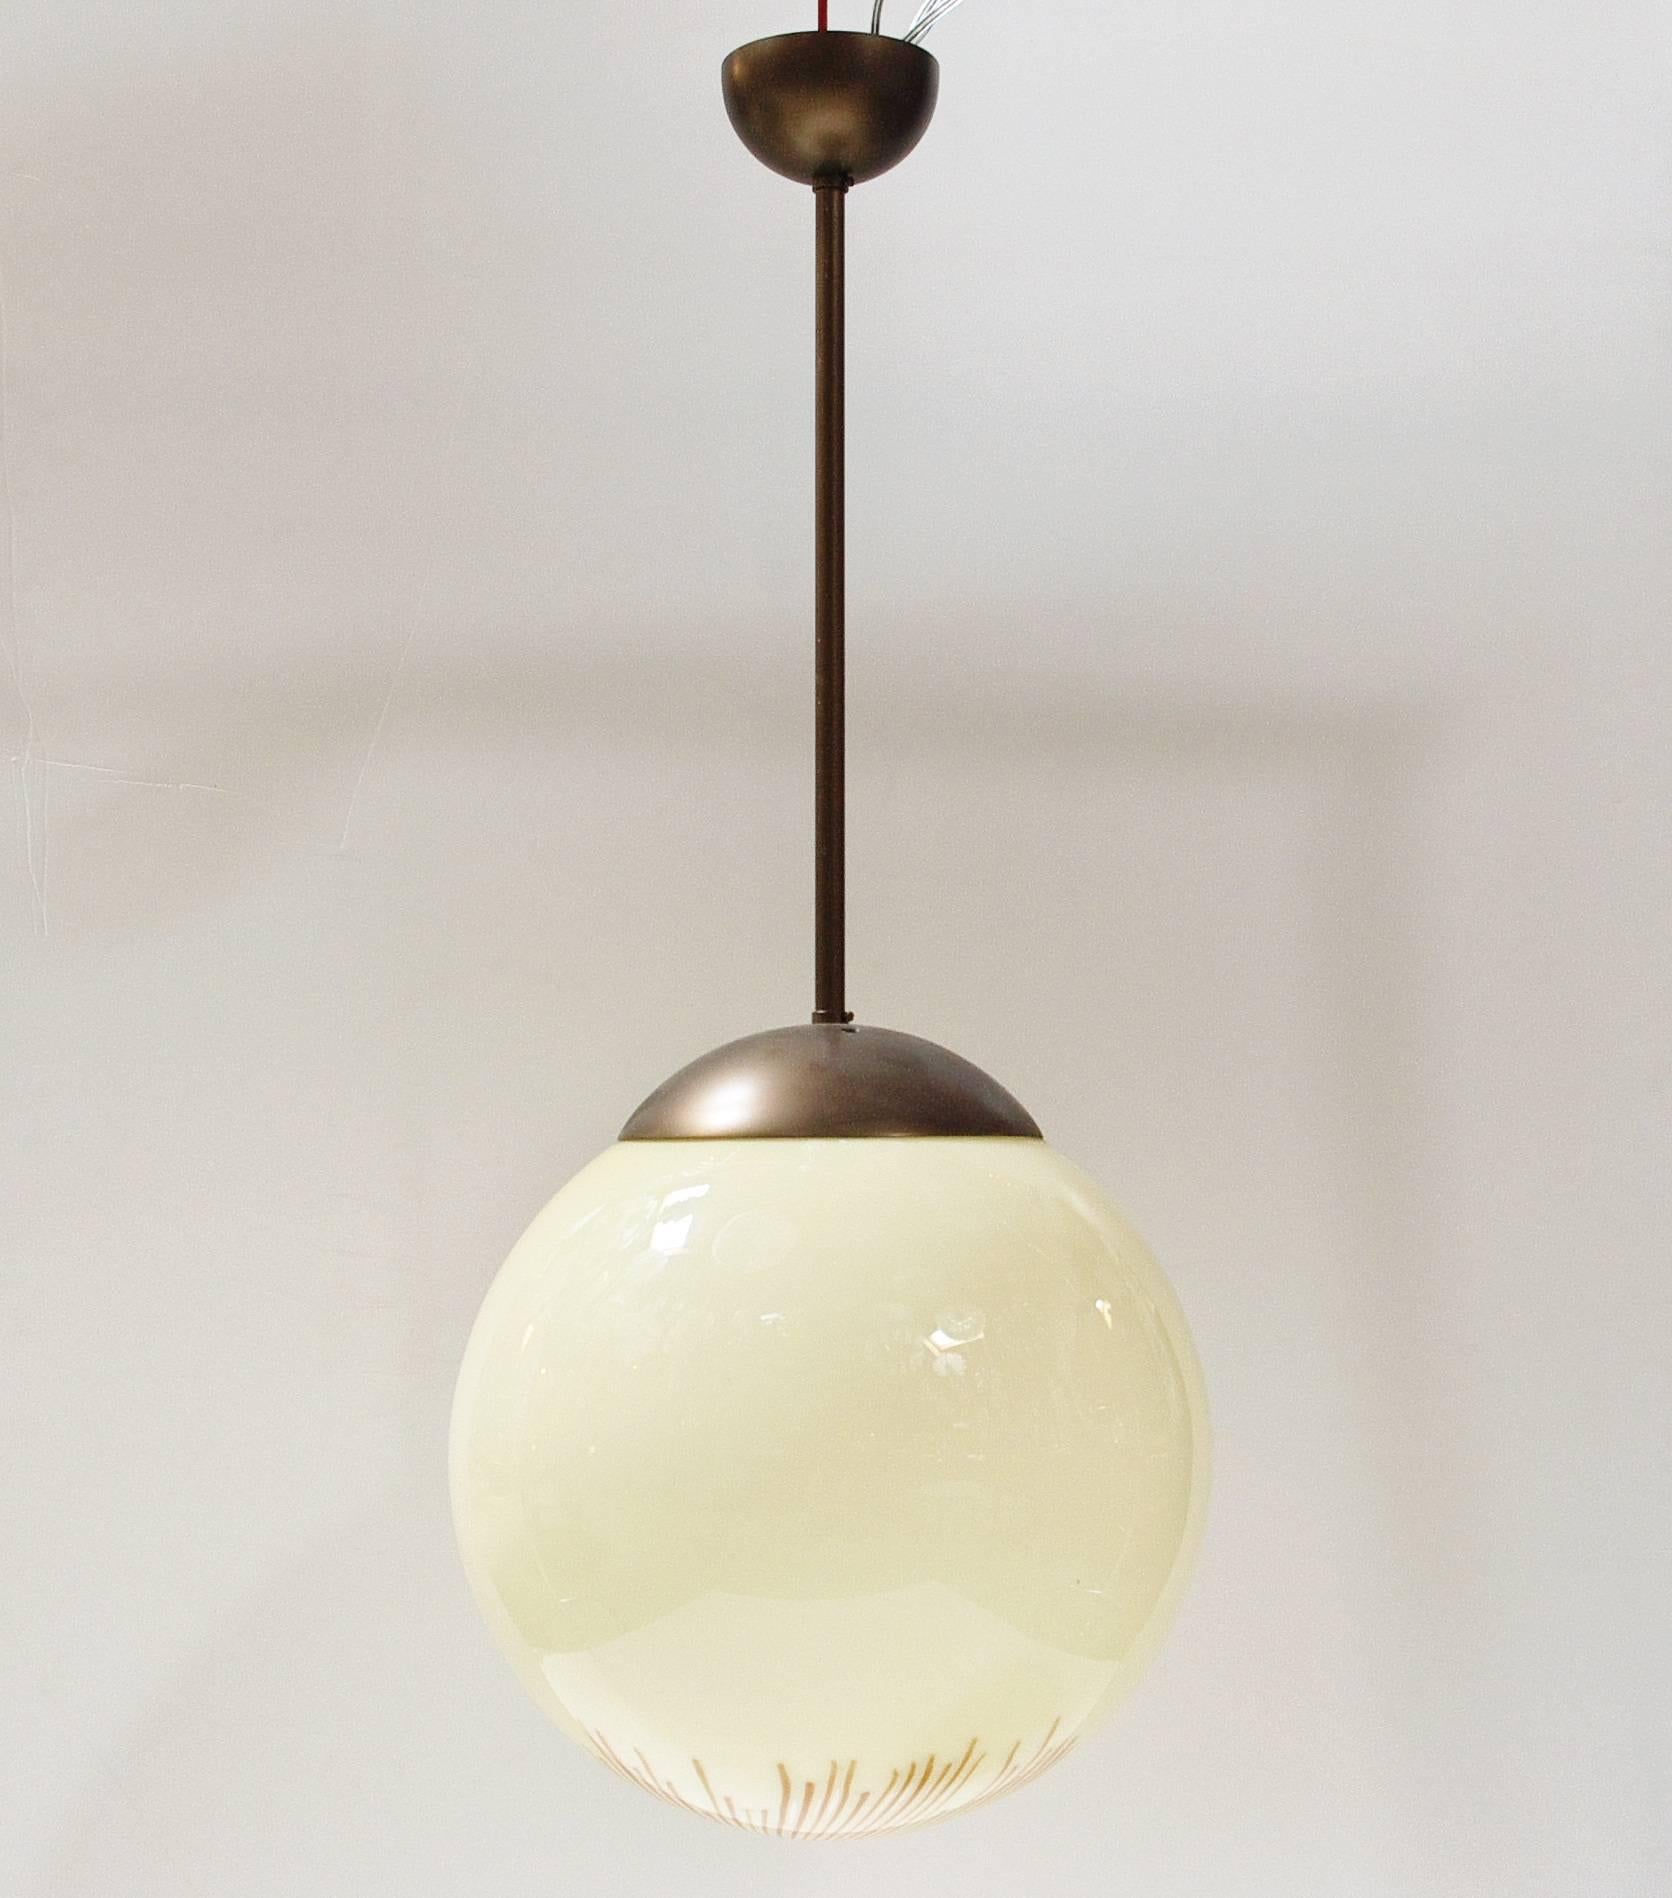 Italian Murano Anemone glass globe pendant with bronzed metal hardware / Designed by Ludovico Diaz de Santillana for Venini circa 1960s / Made in Italy
1 light / E26 or E27 type / max 60W
Measures: Diameter: 14 inches / height 34 inches including